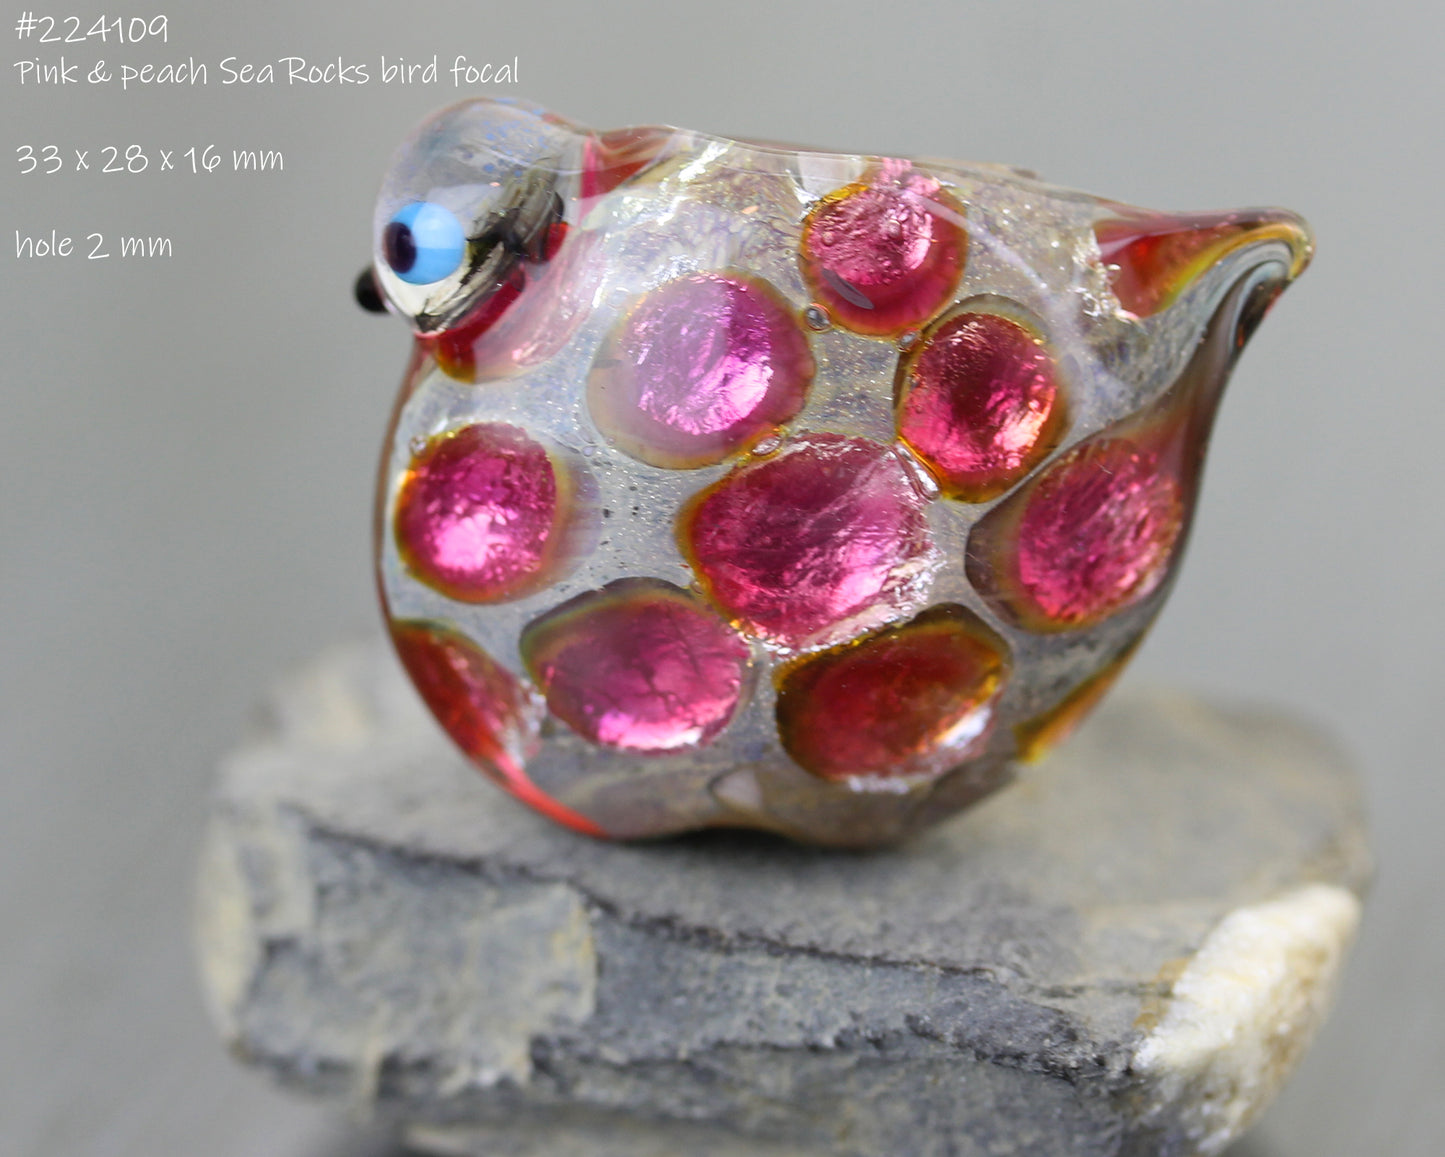 Peach & hot pink Jewels Sea Rocks Bird focal #224109